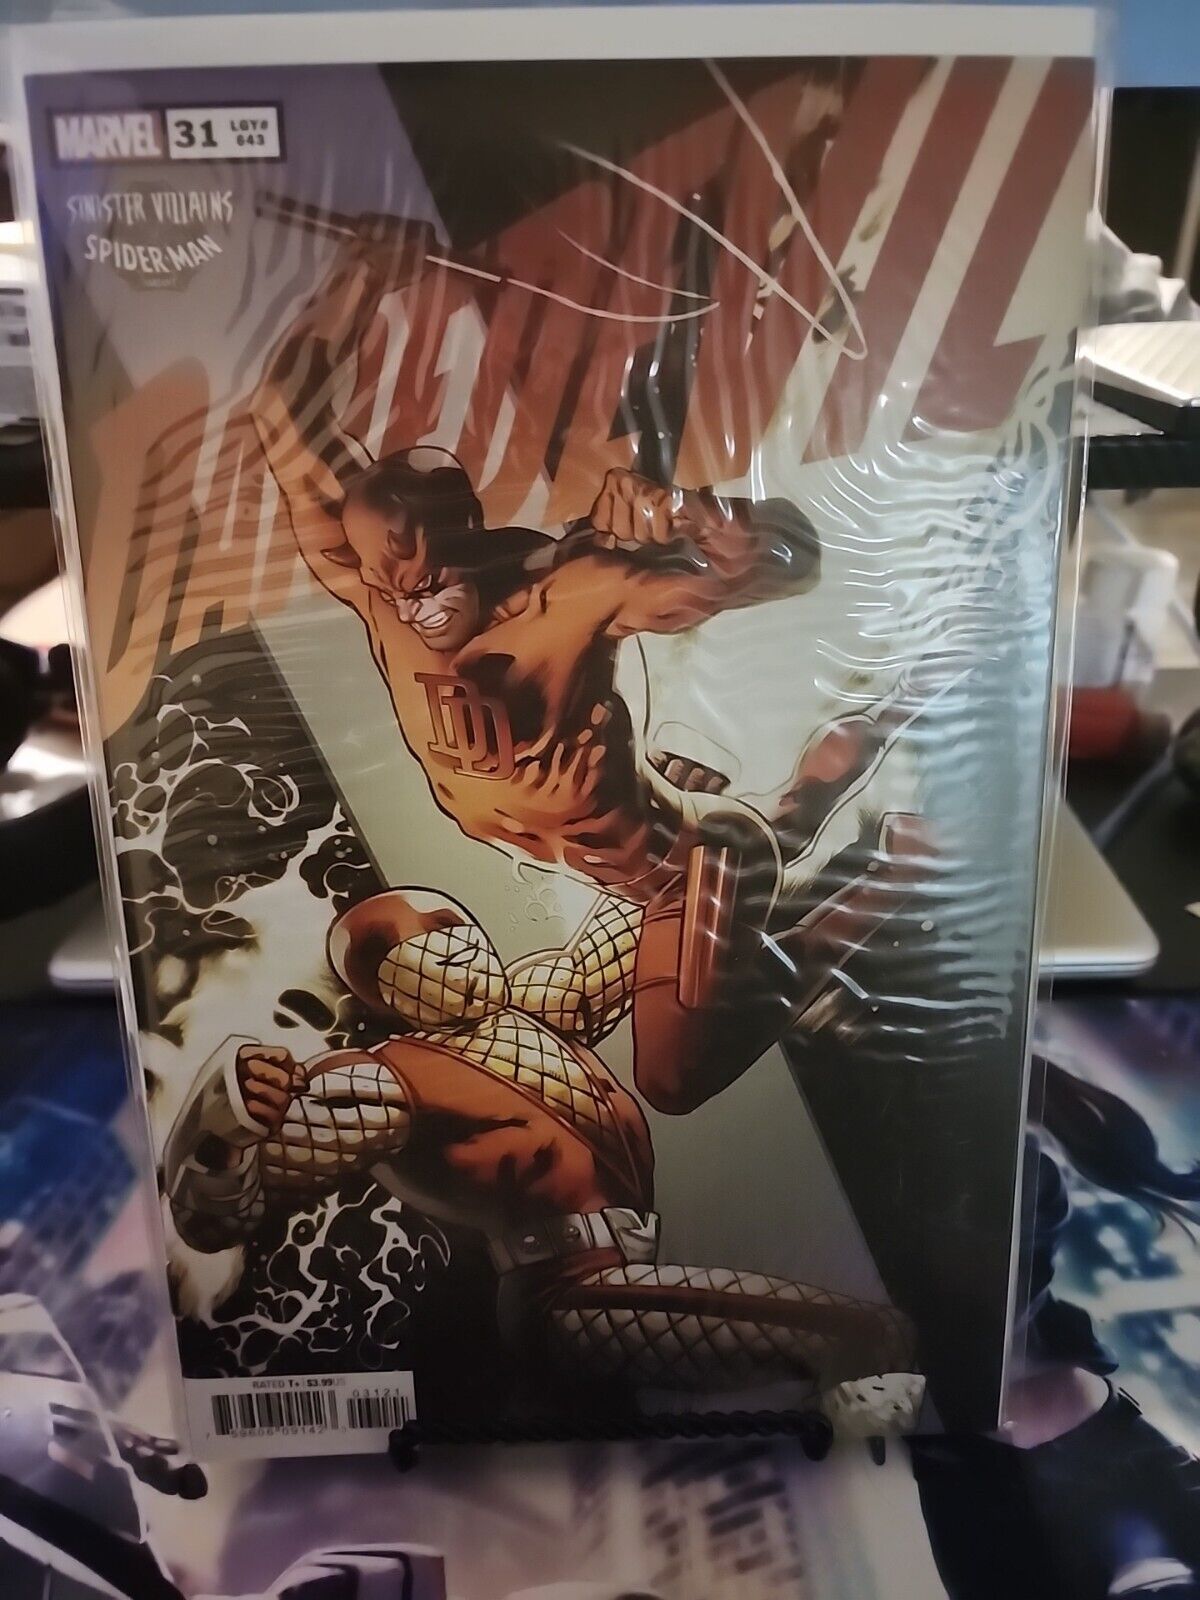 Daredevil #31 LGY 643 Sinister Villians Of Spider-Man Variant cover comic Book